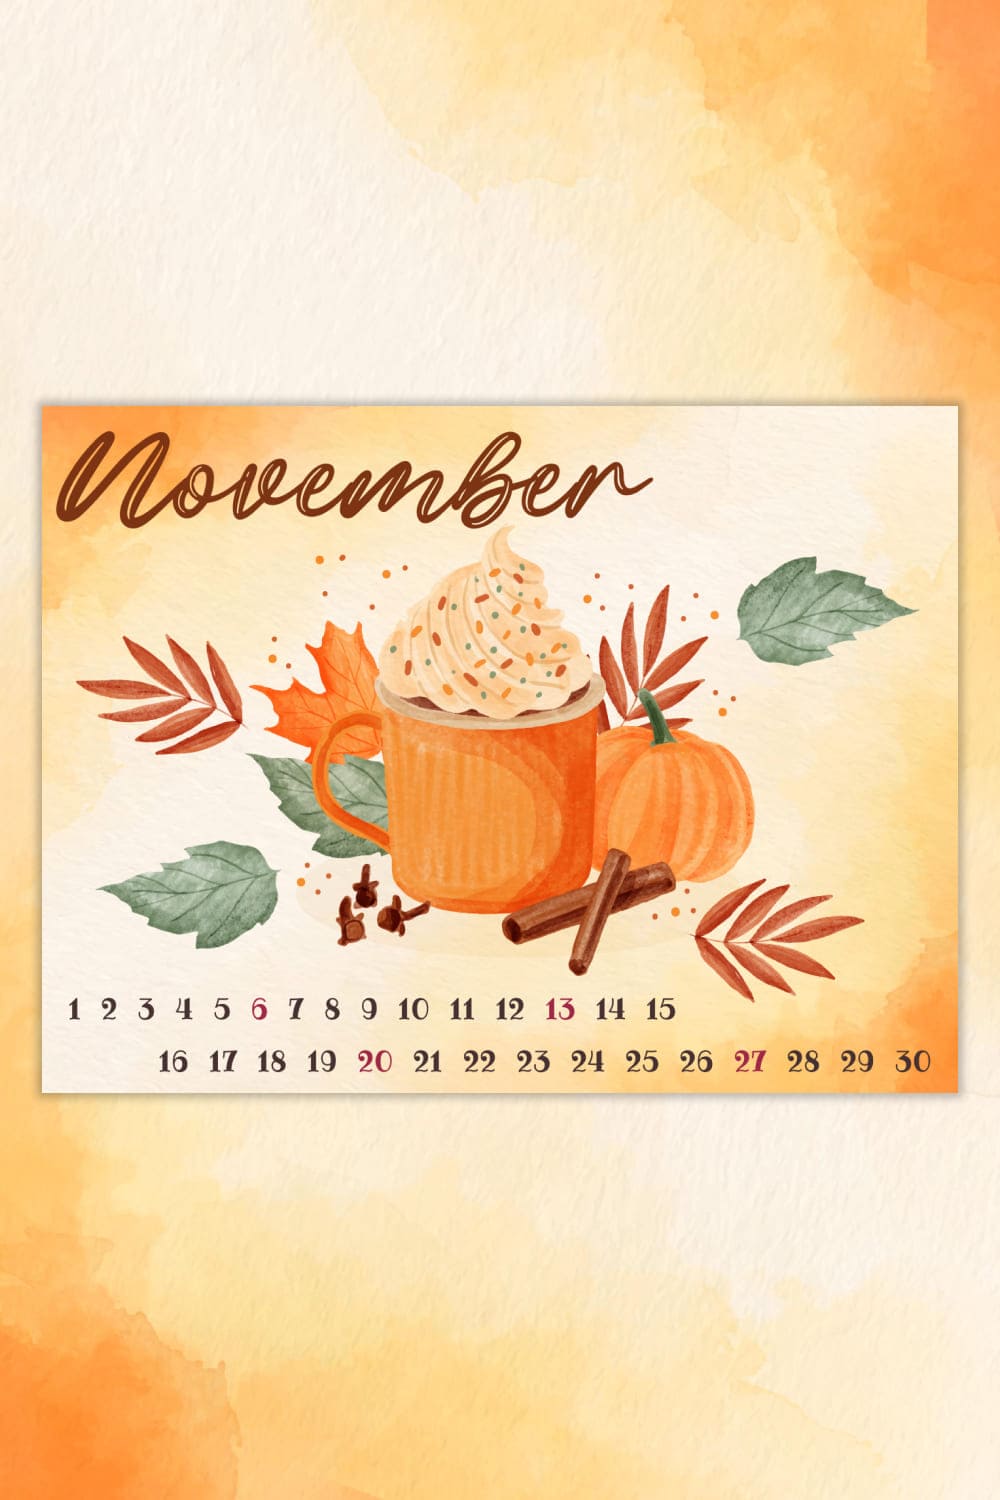 Free food calendar for November, Pinterest picture 1000x1500.